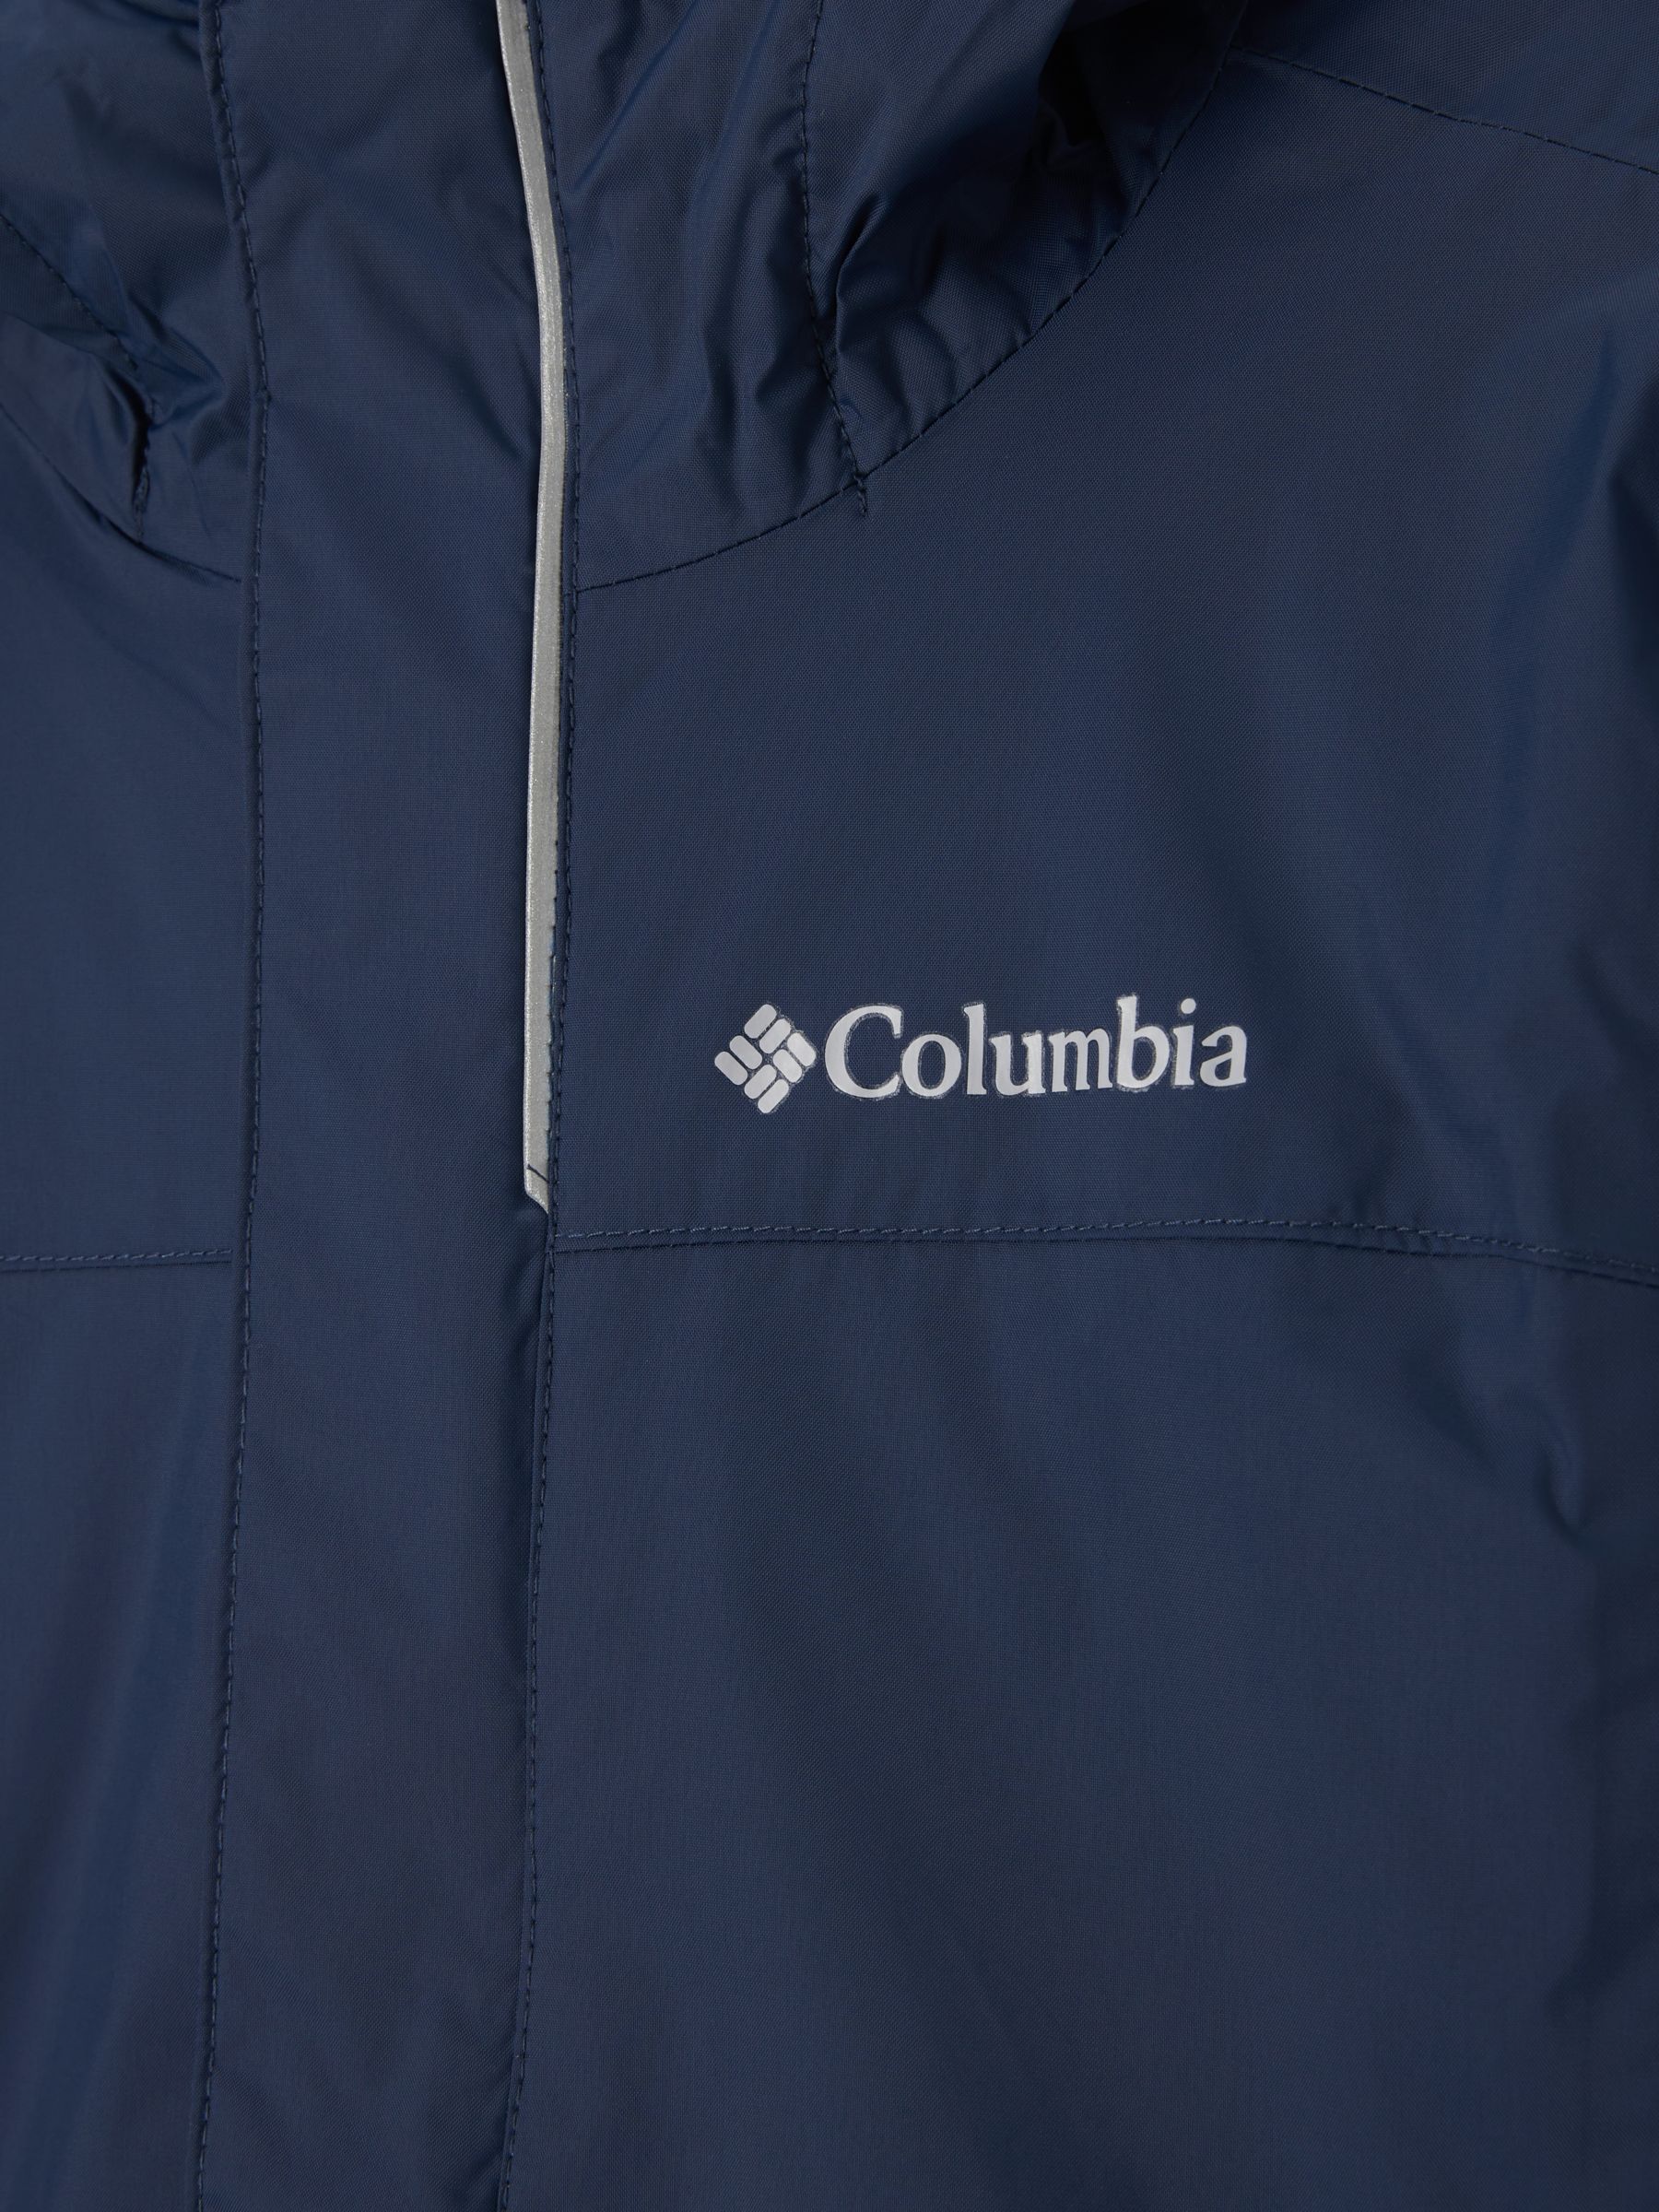 Buy Columbia Kids' Omni-Tech™ Watertight Jacket, Navy Online at johnlewis.com